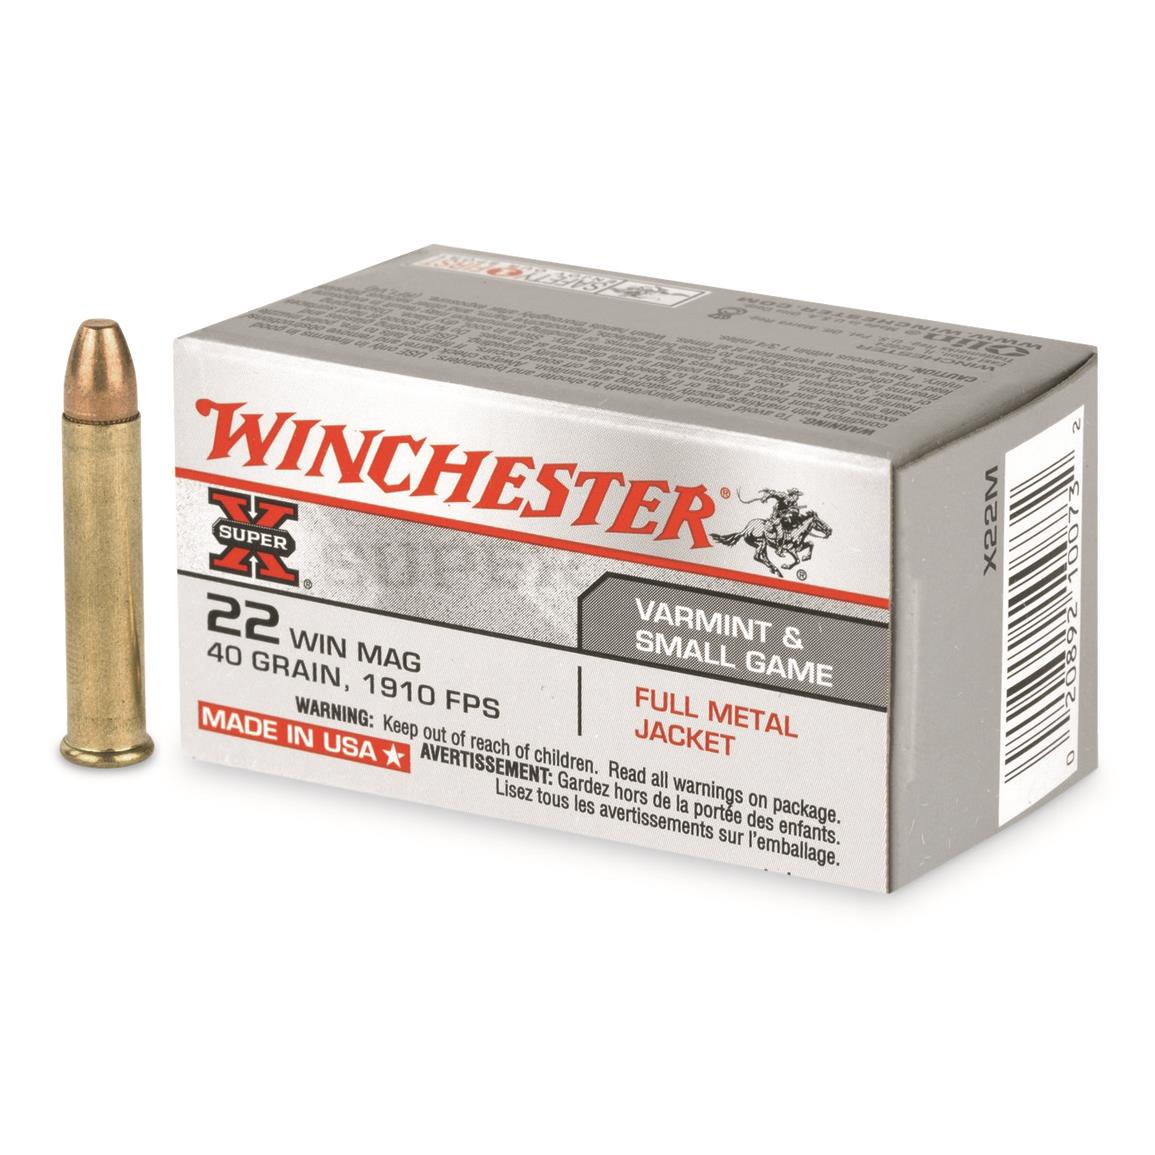 Winchester Super-X, .22 Magnum, FMJ, 40 Grain, 50 Rounds